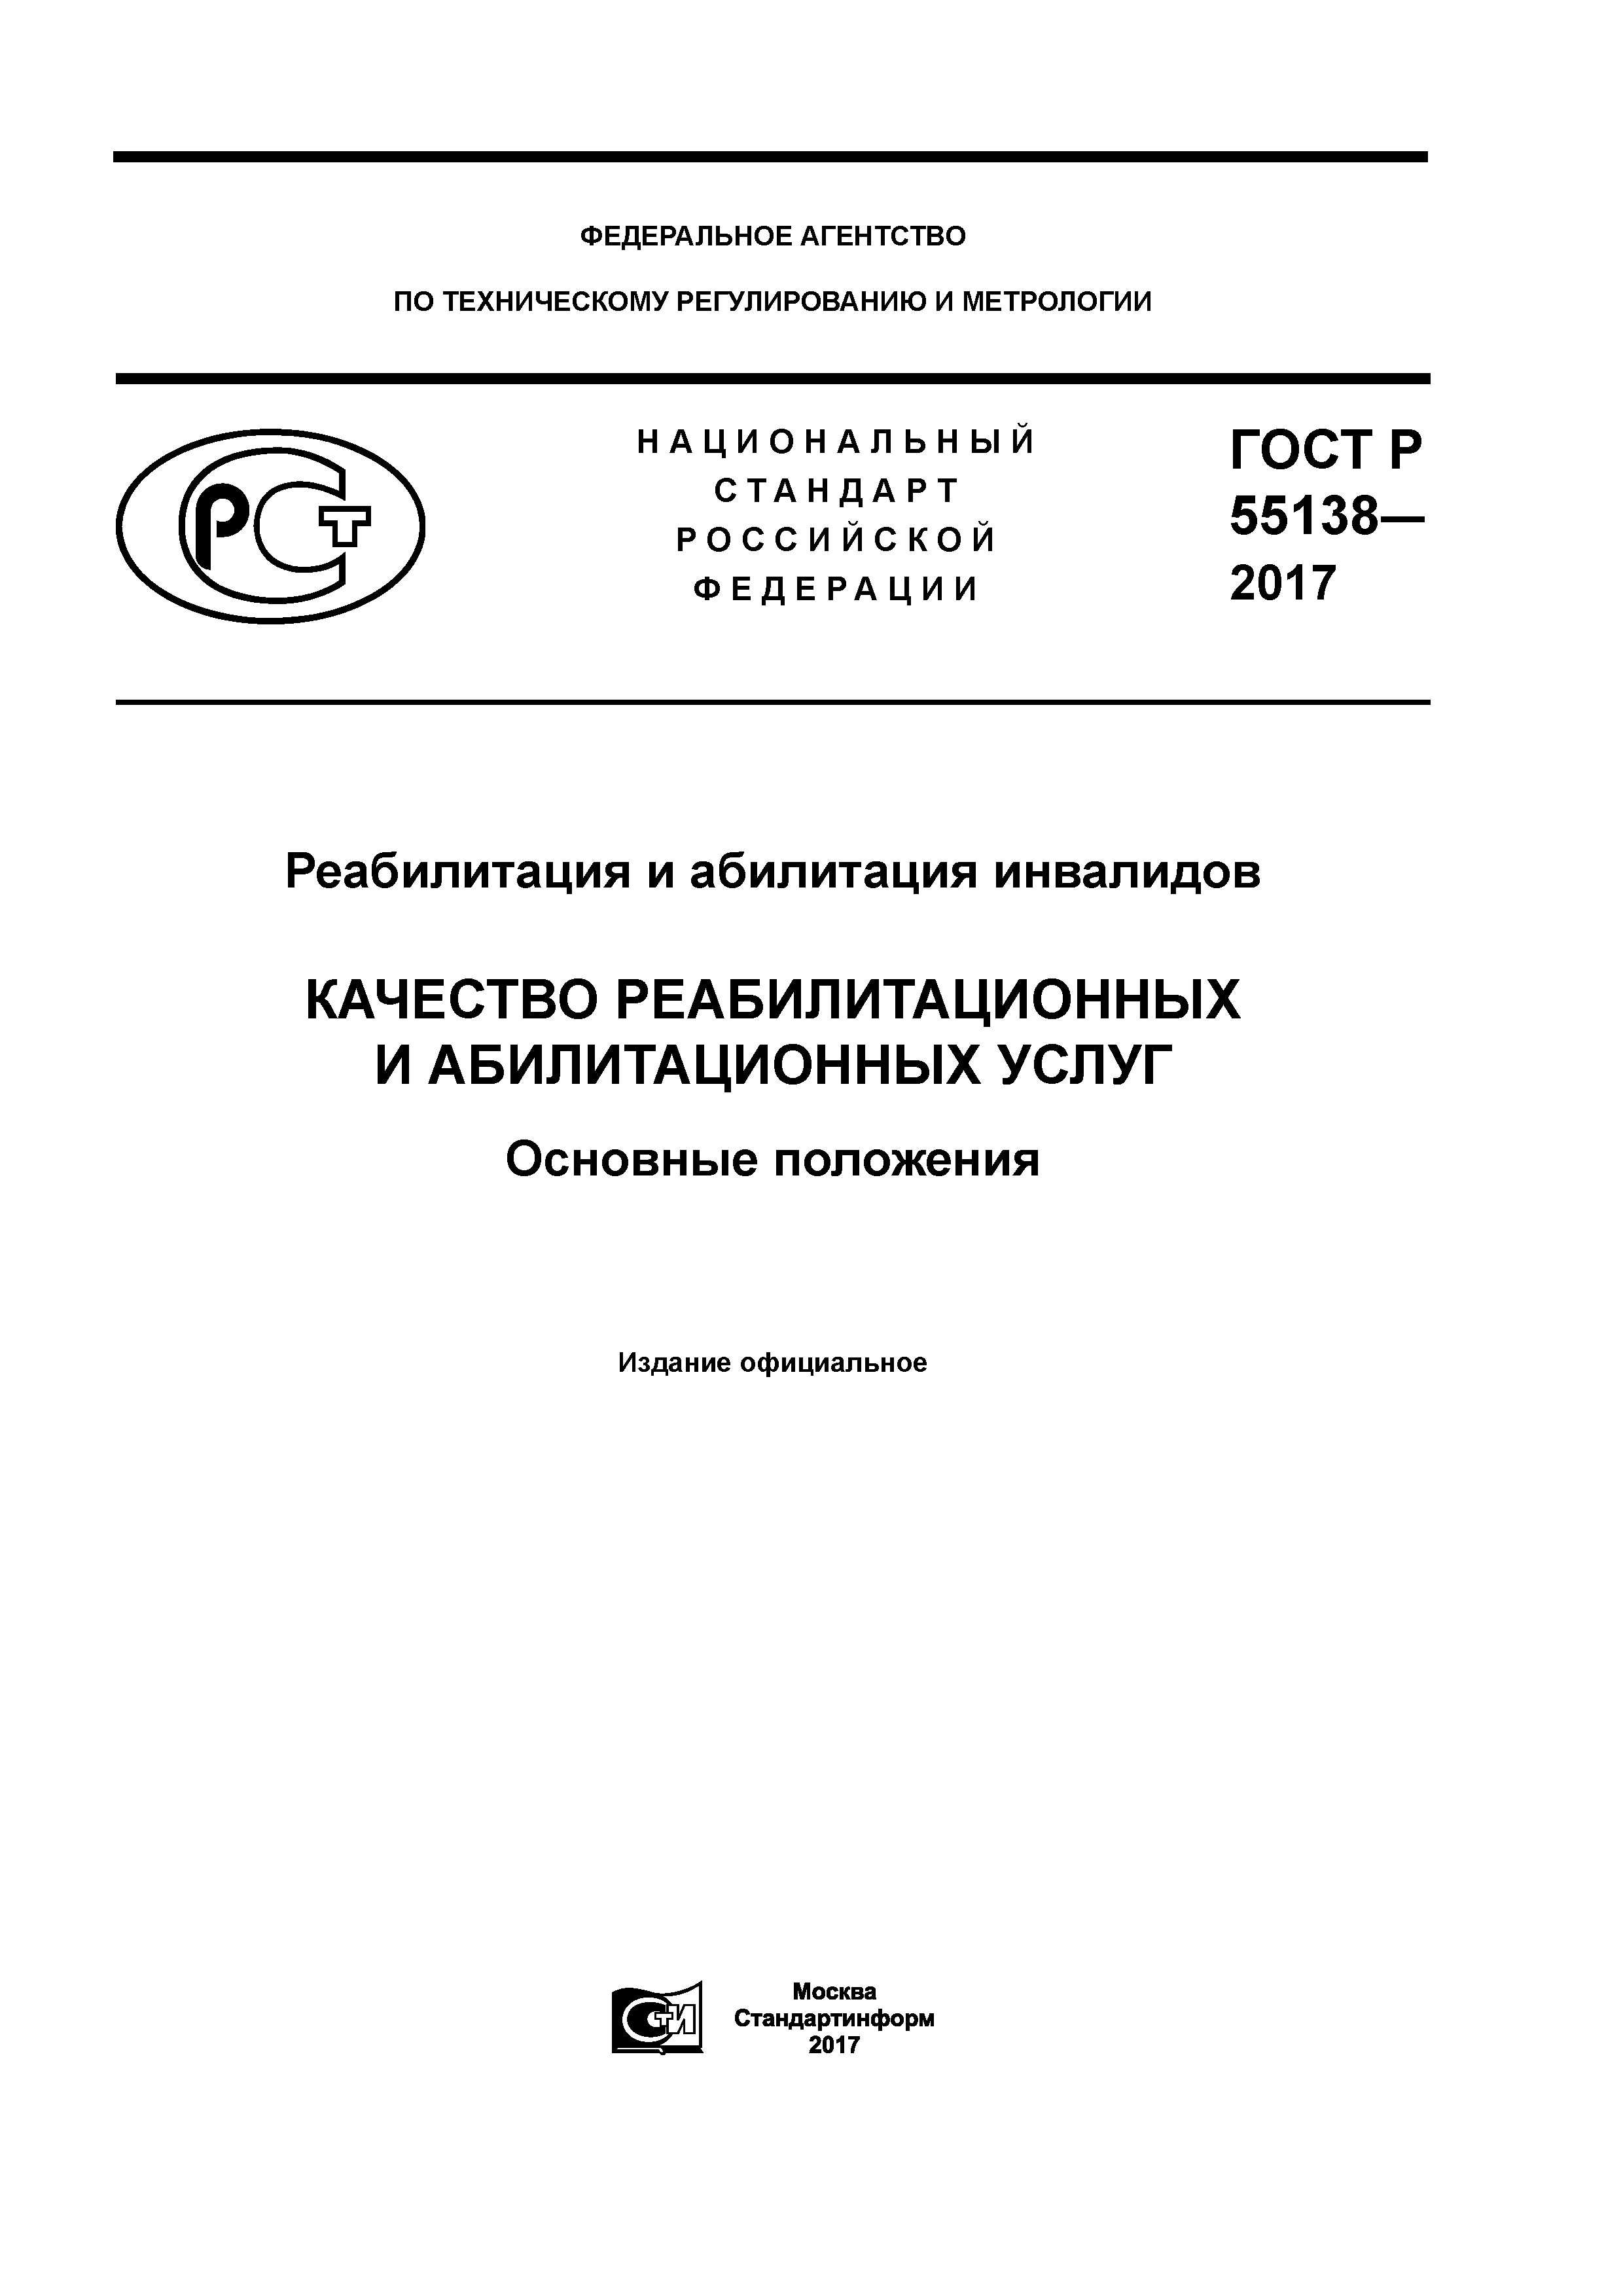 ГОСТ Р 55138-2017